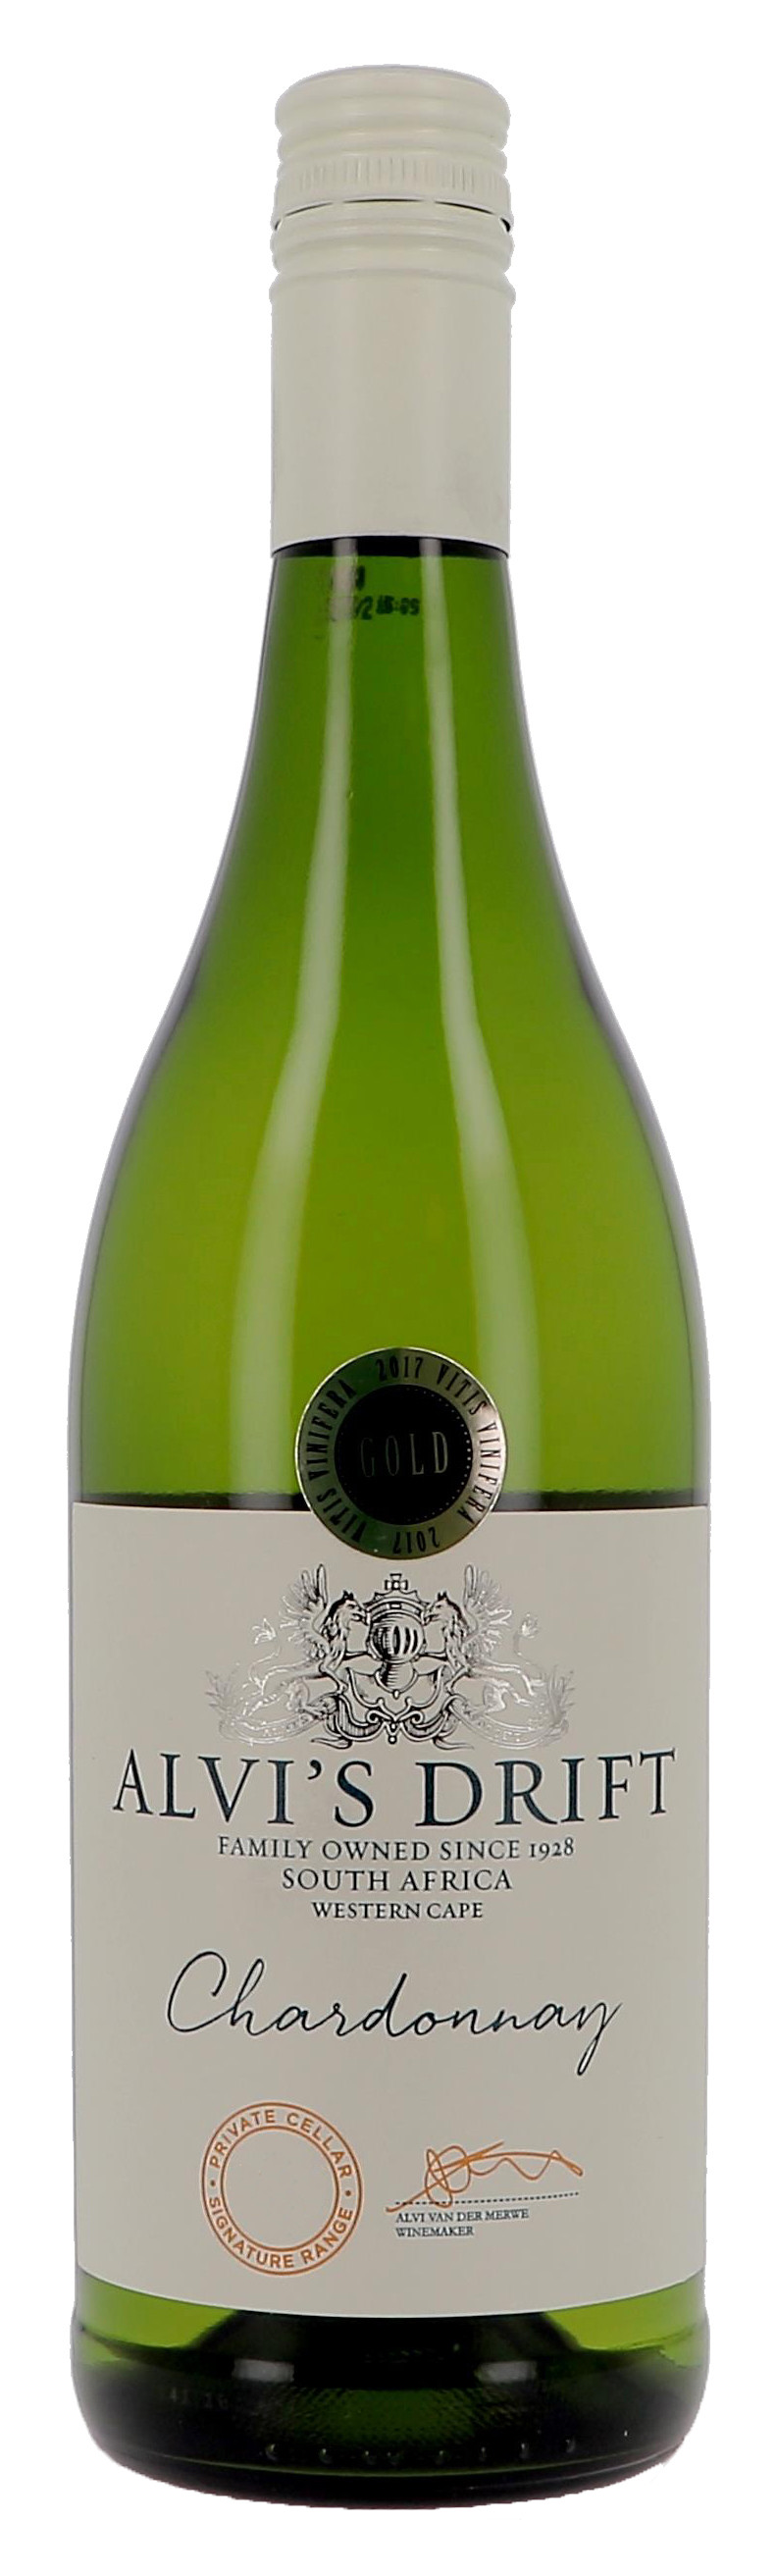 Signature Chardonnay 75cl 2017 Alvi's Drift - Breede River Valley - Zuid Afrika (Wijnen)